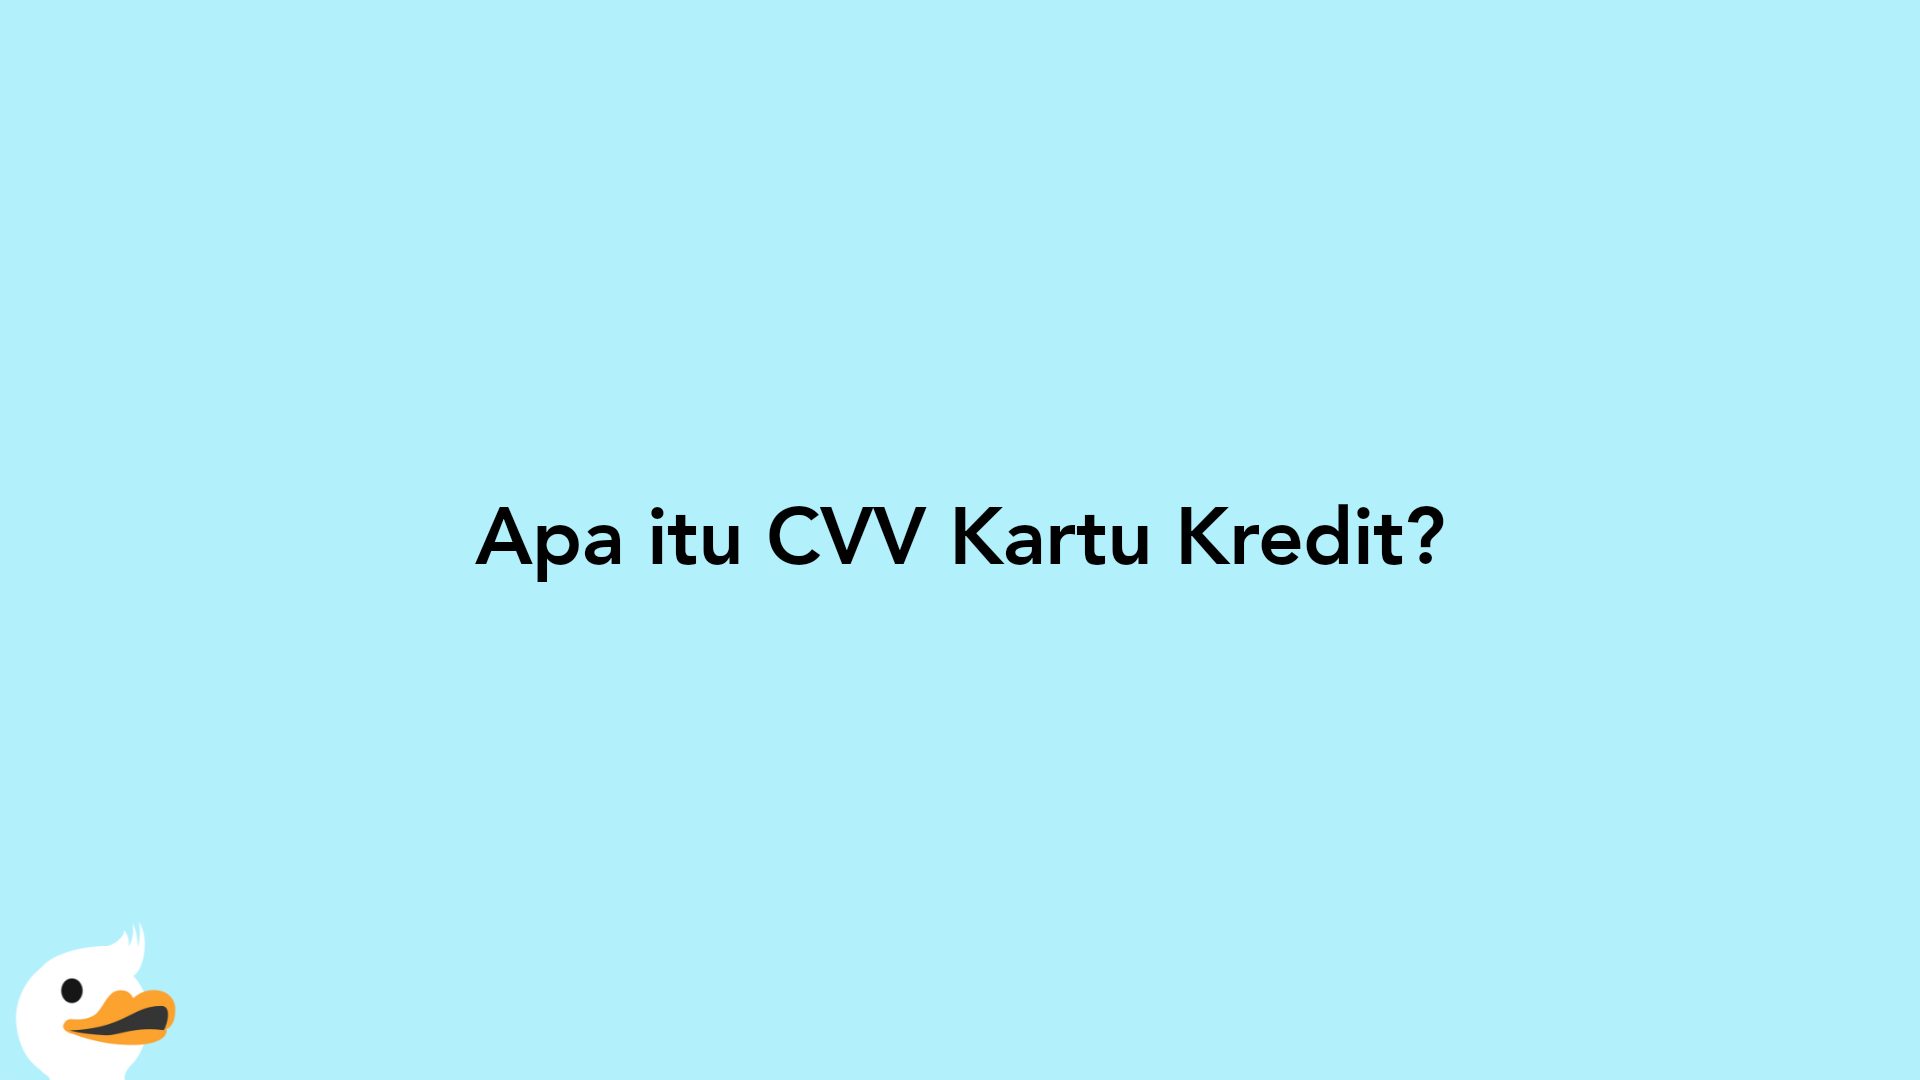 Apa itu CVV Kartu Kredit?